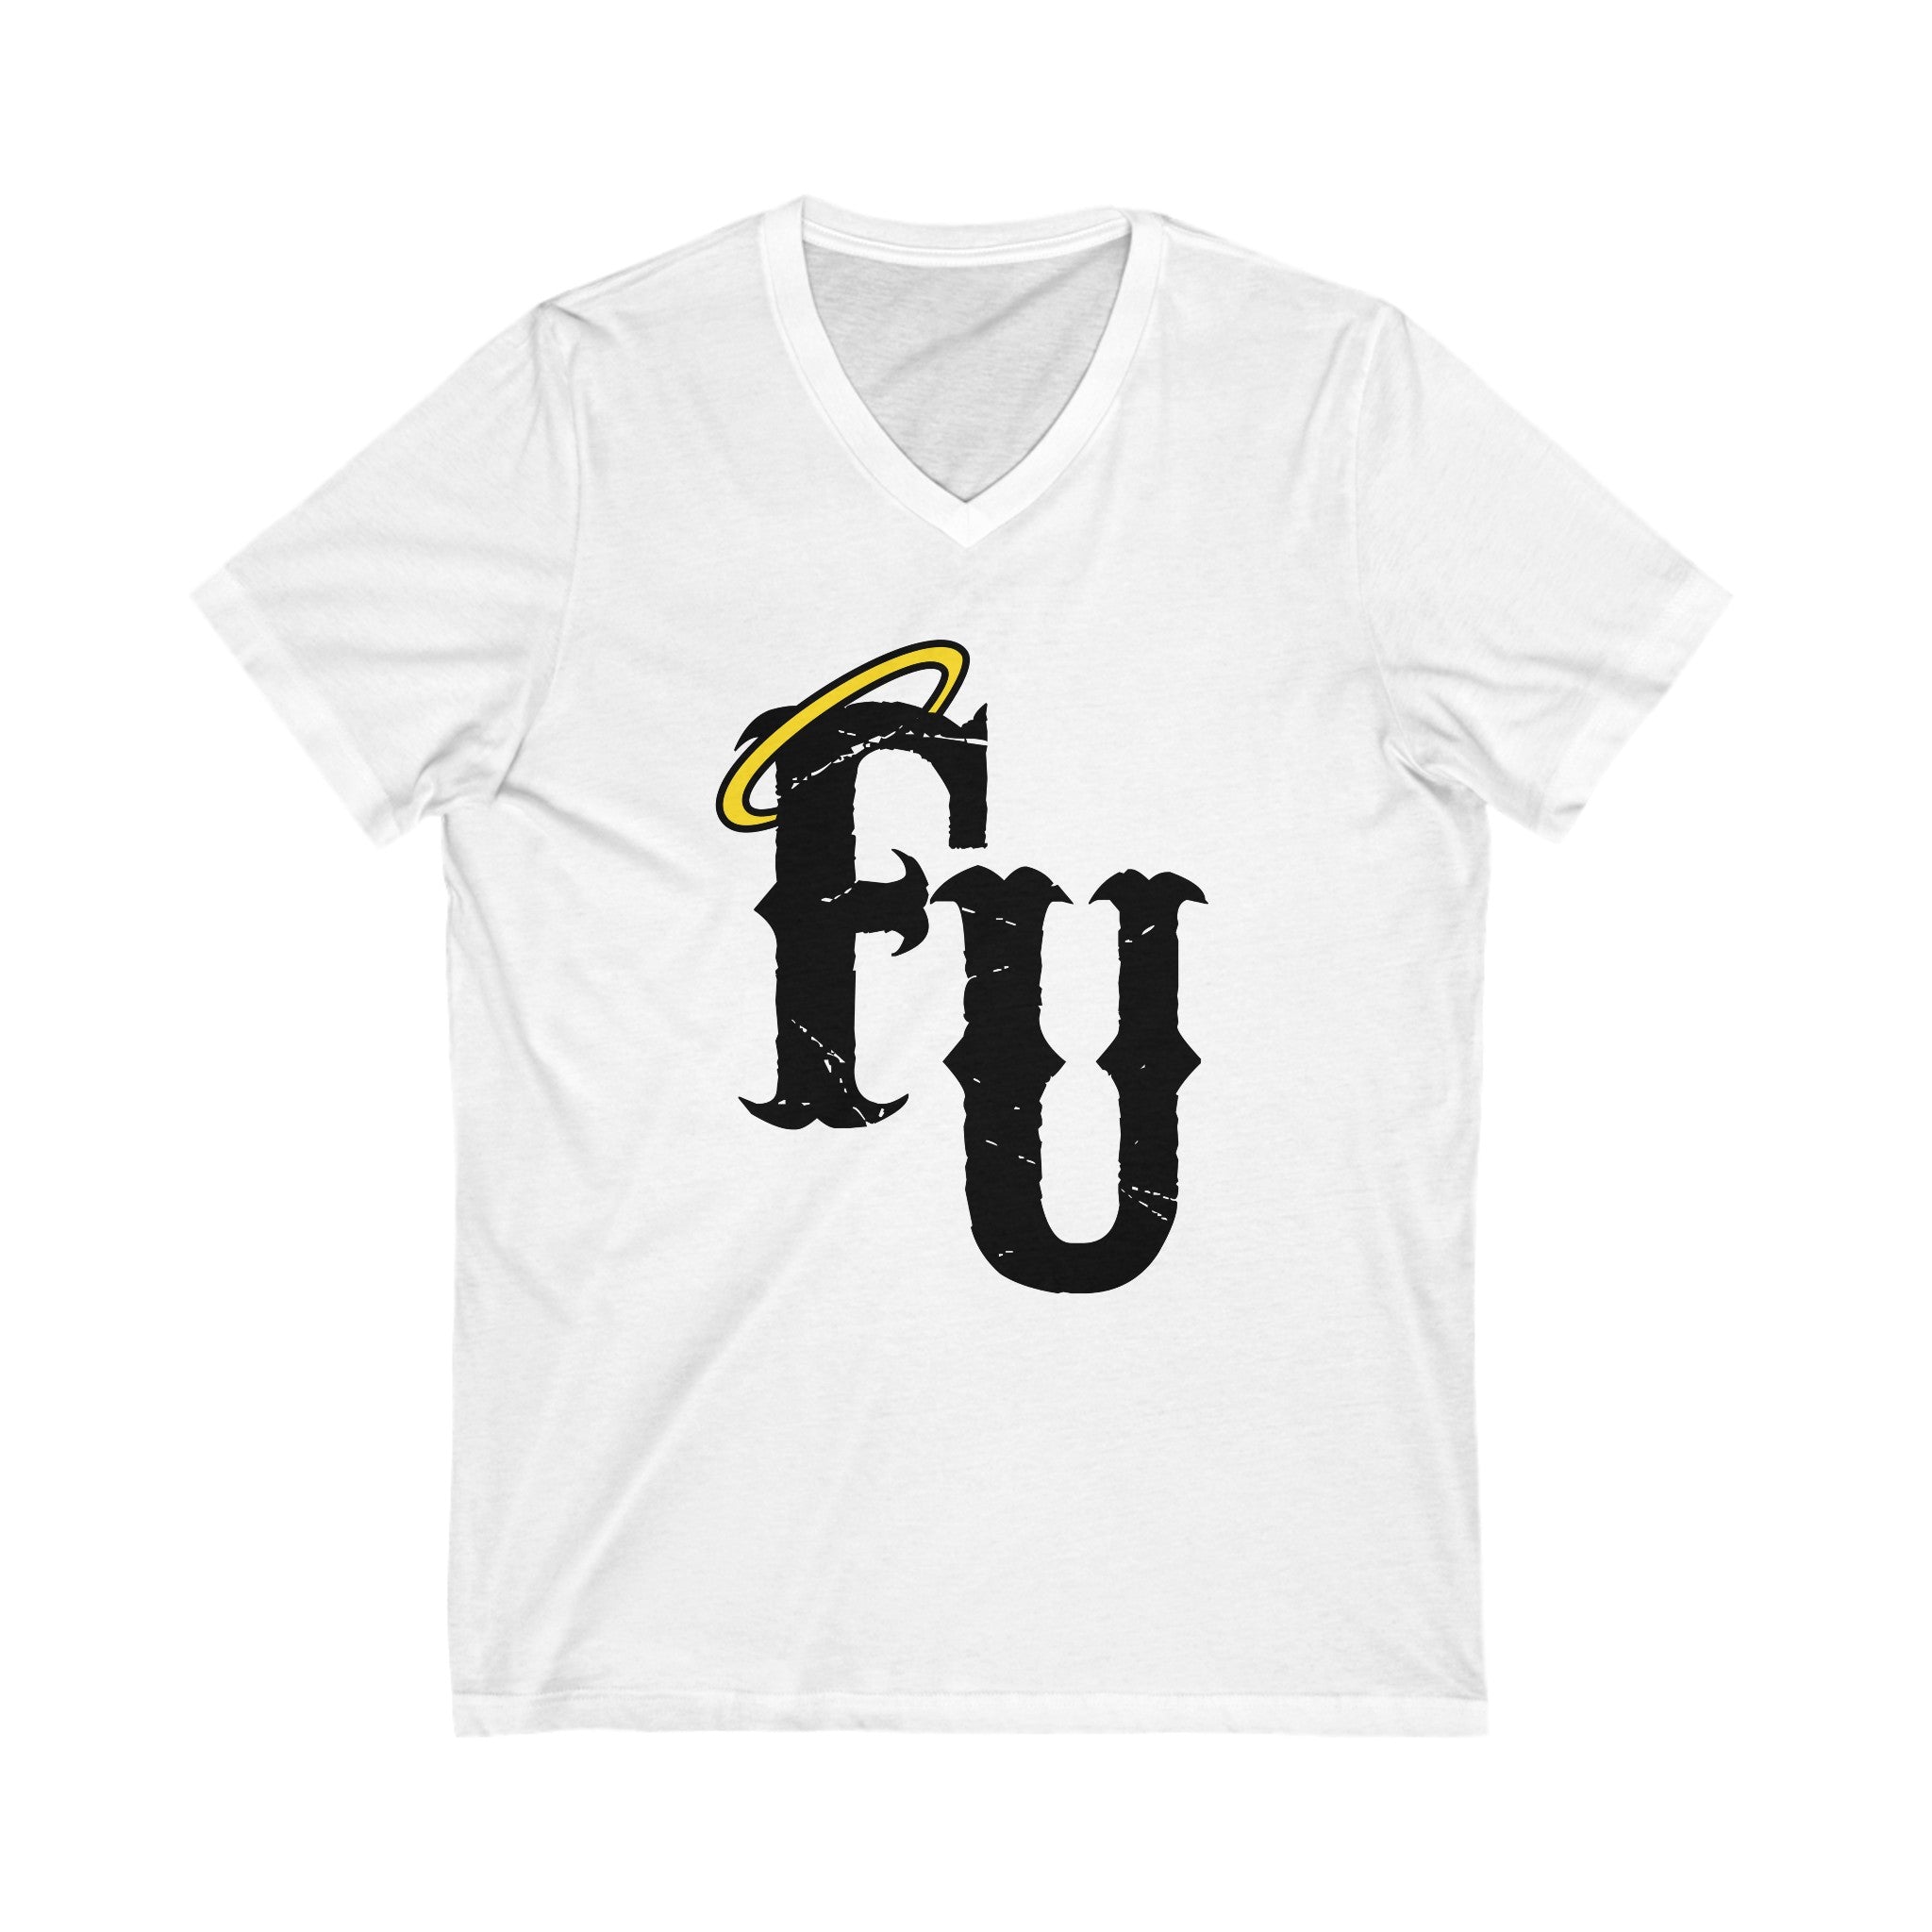 FURDreams “University“ II Short Sleeve V-Neck